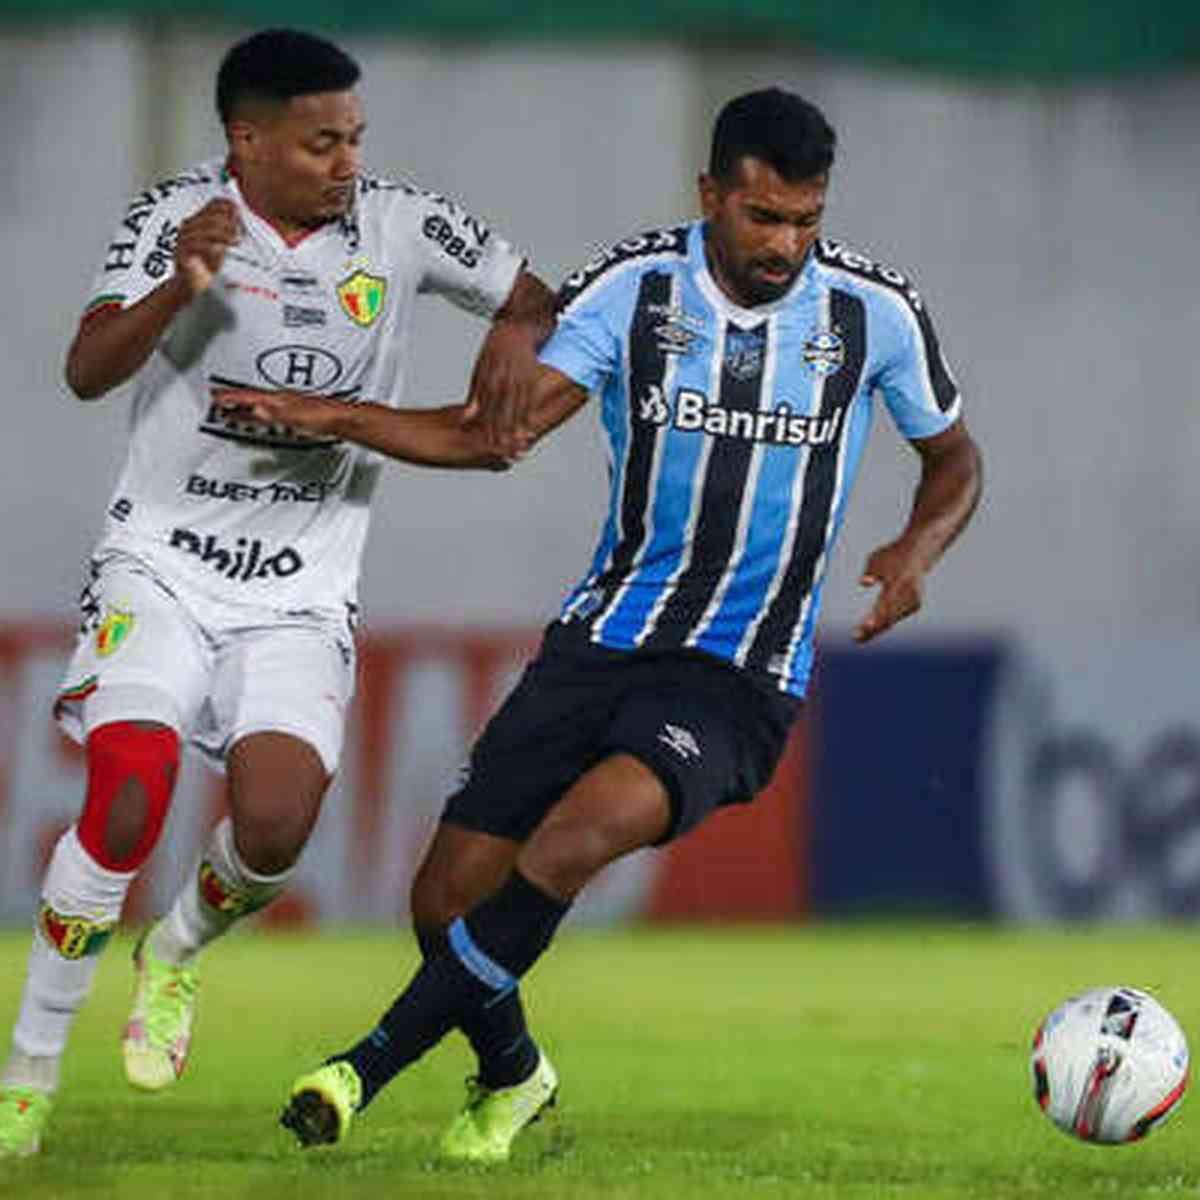 Ceará SC vs Tombense: A Clash of Titans in the Copa do Brasil